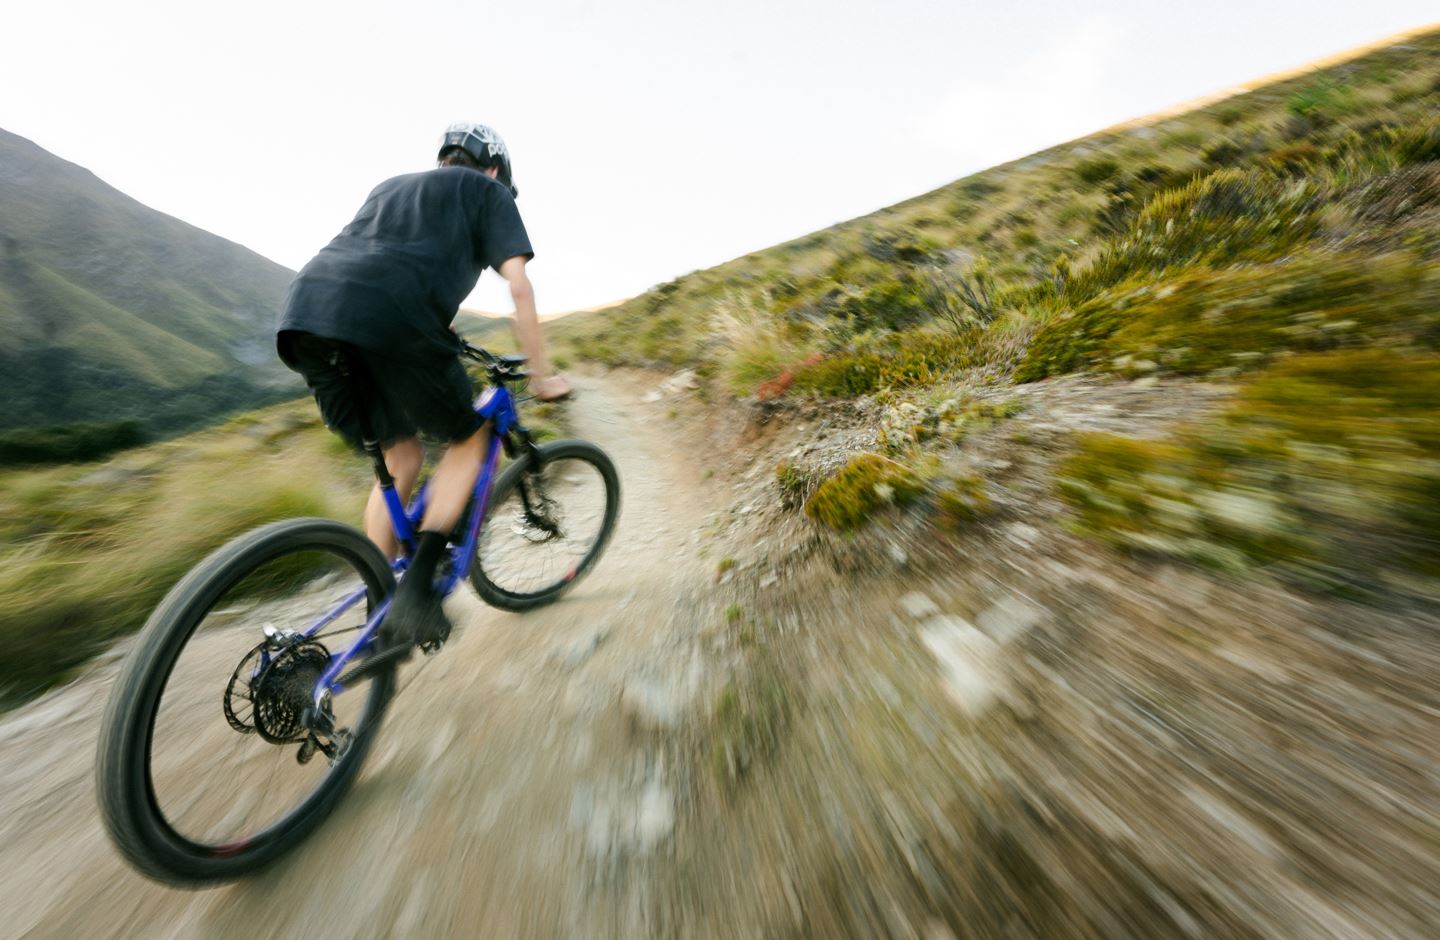 Ben Hildred climb his bike on an alpine trail